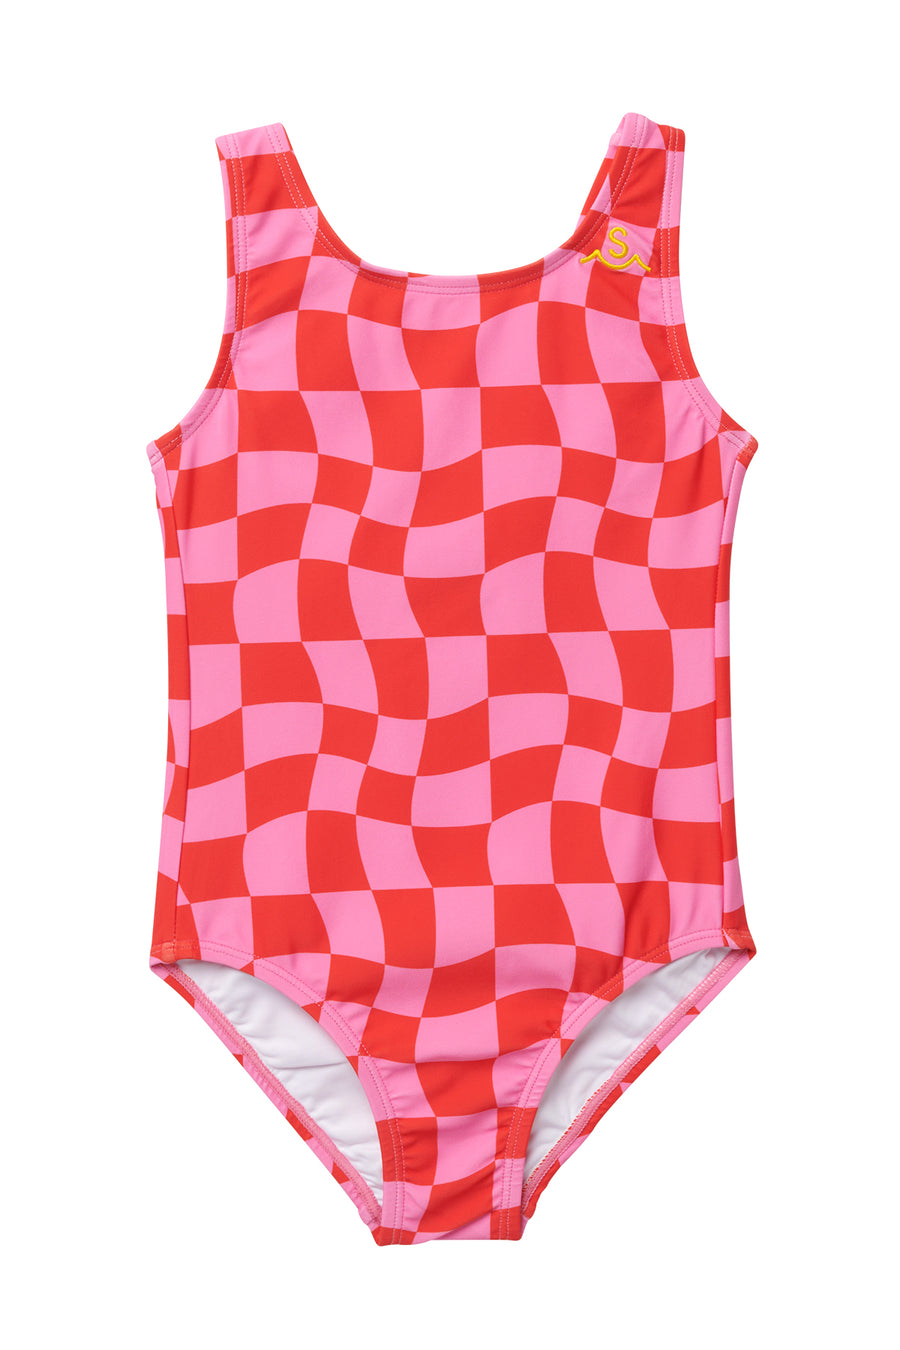 Wavy Checks Swimsuit / Fuchsia